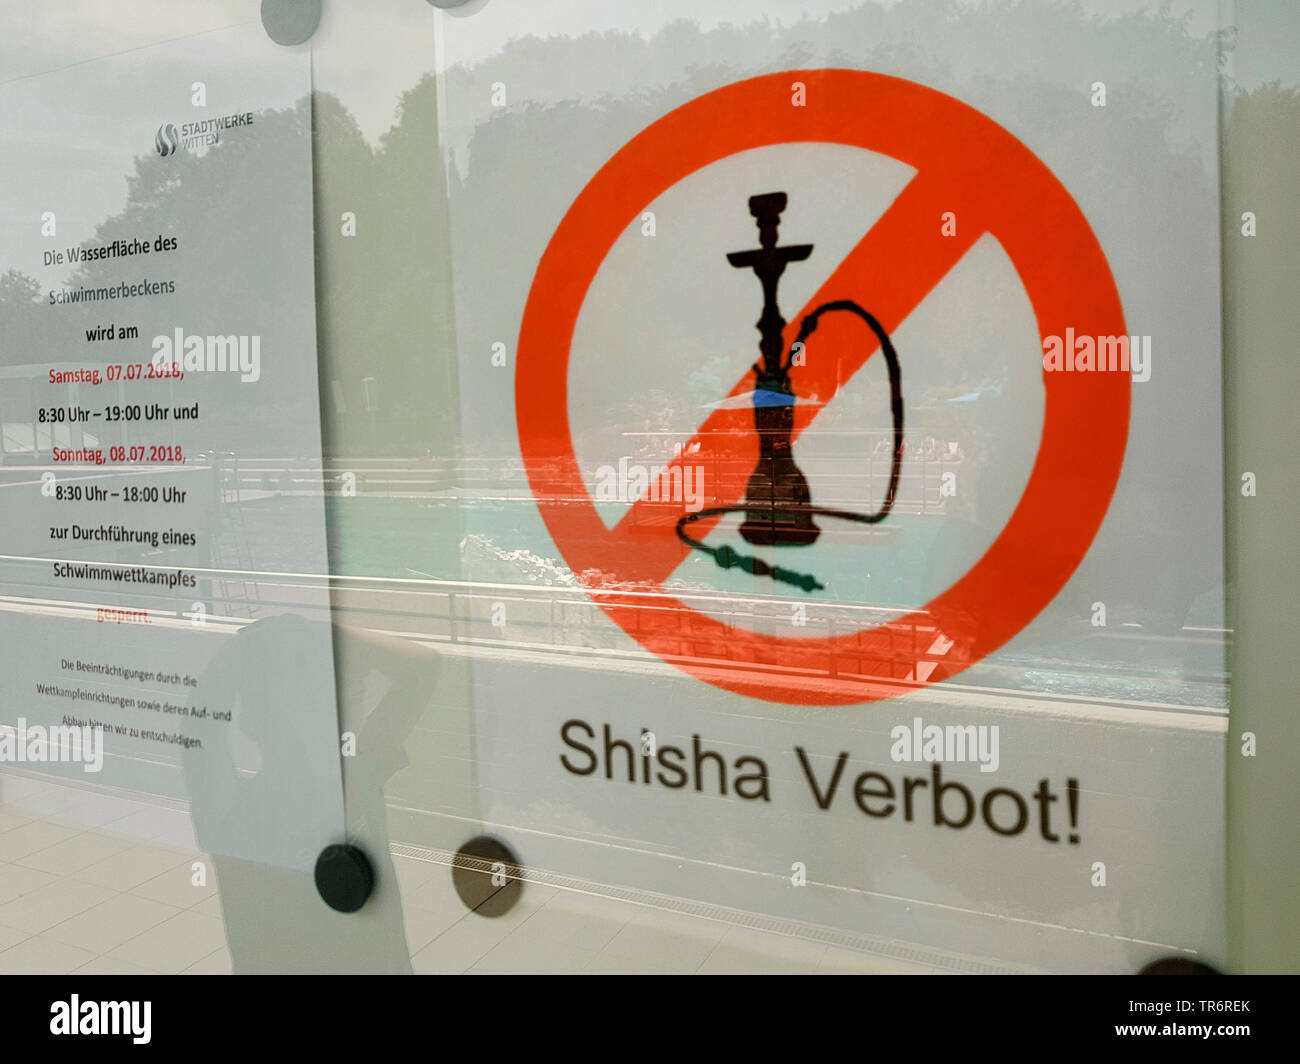 prohibition of shisha smoking in a swimming bath, Germany Stock Photo